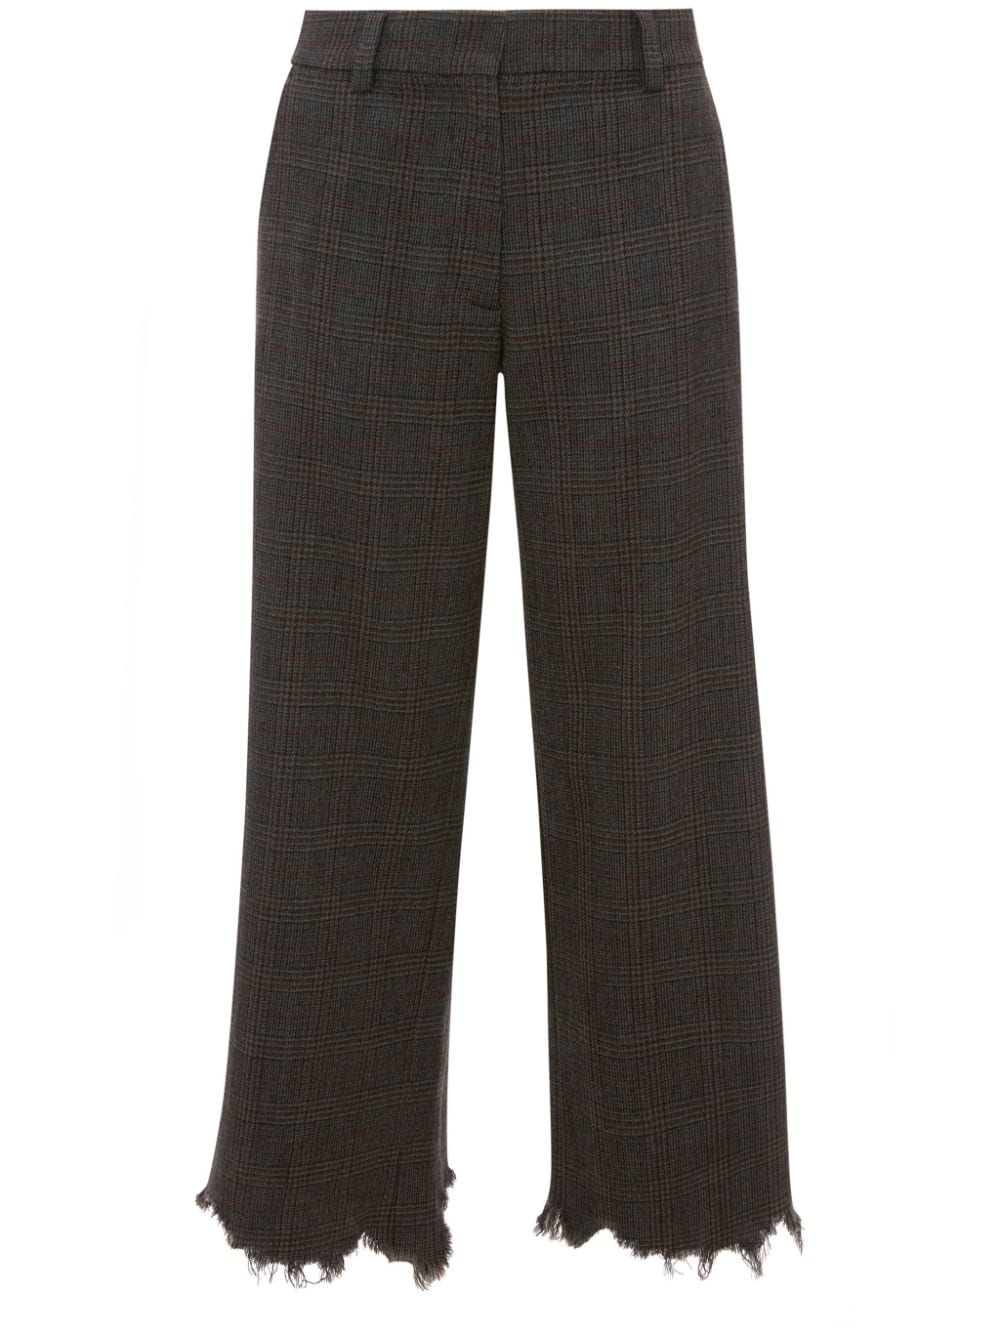 JW ANDERSON Elegantly Modern Welsh Pants for Women - Grey